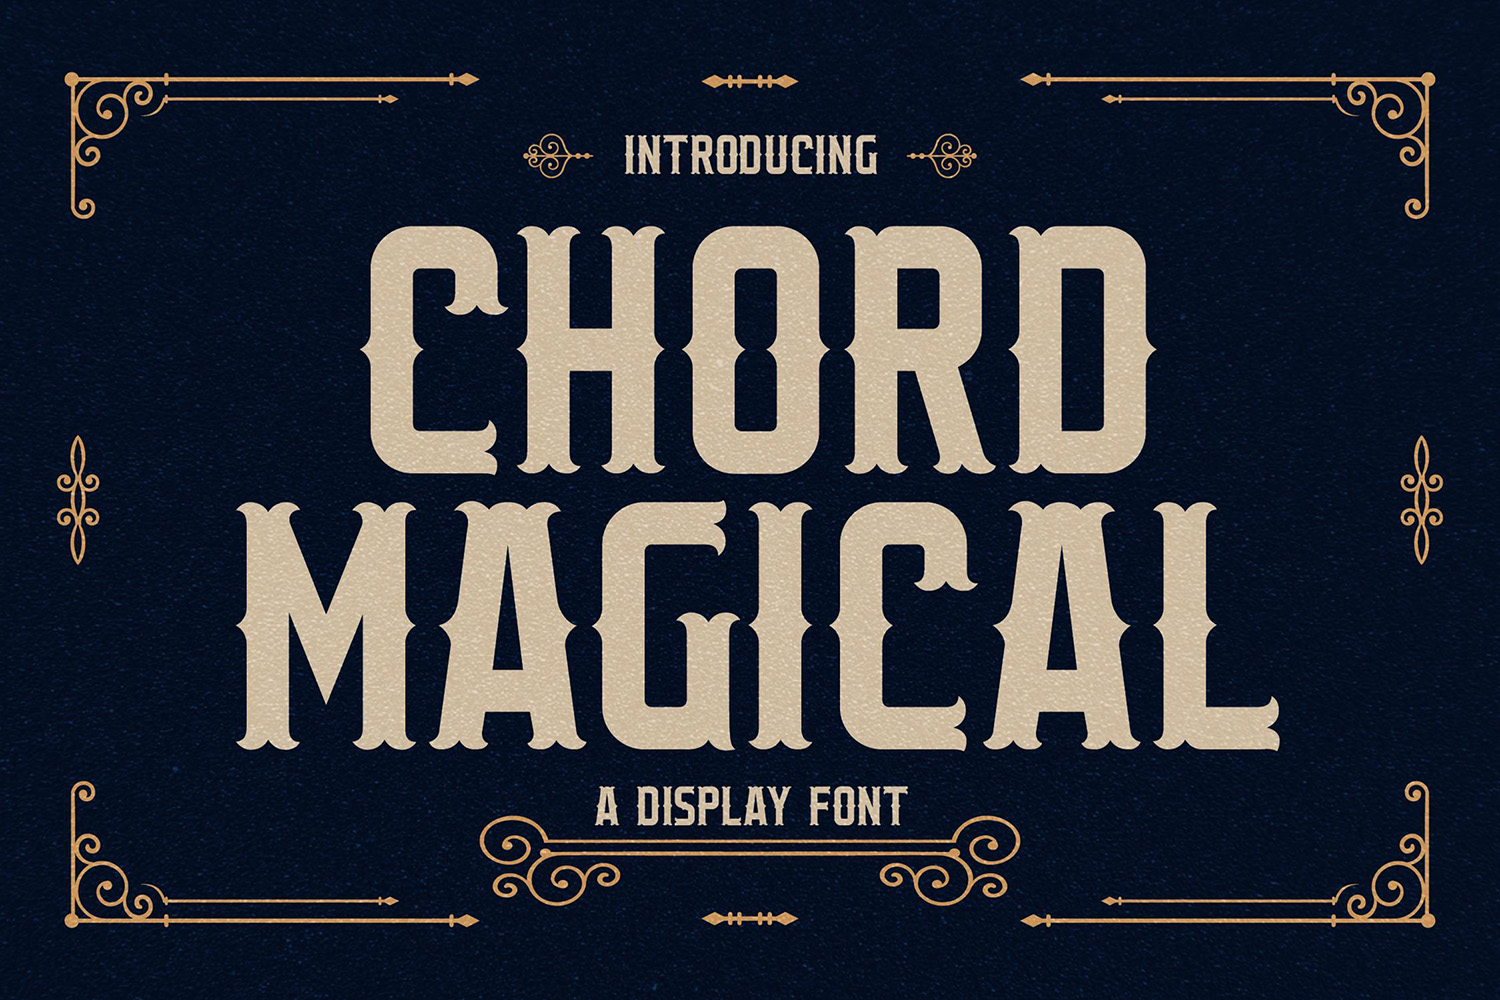 Chord Magical Free Font